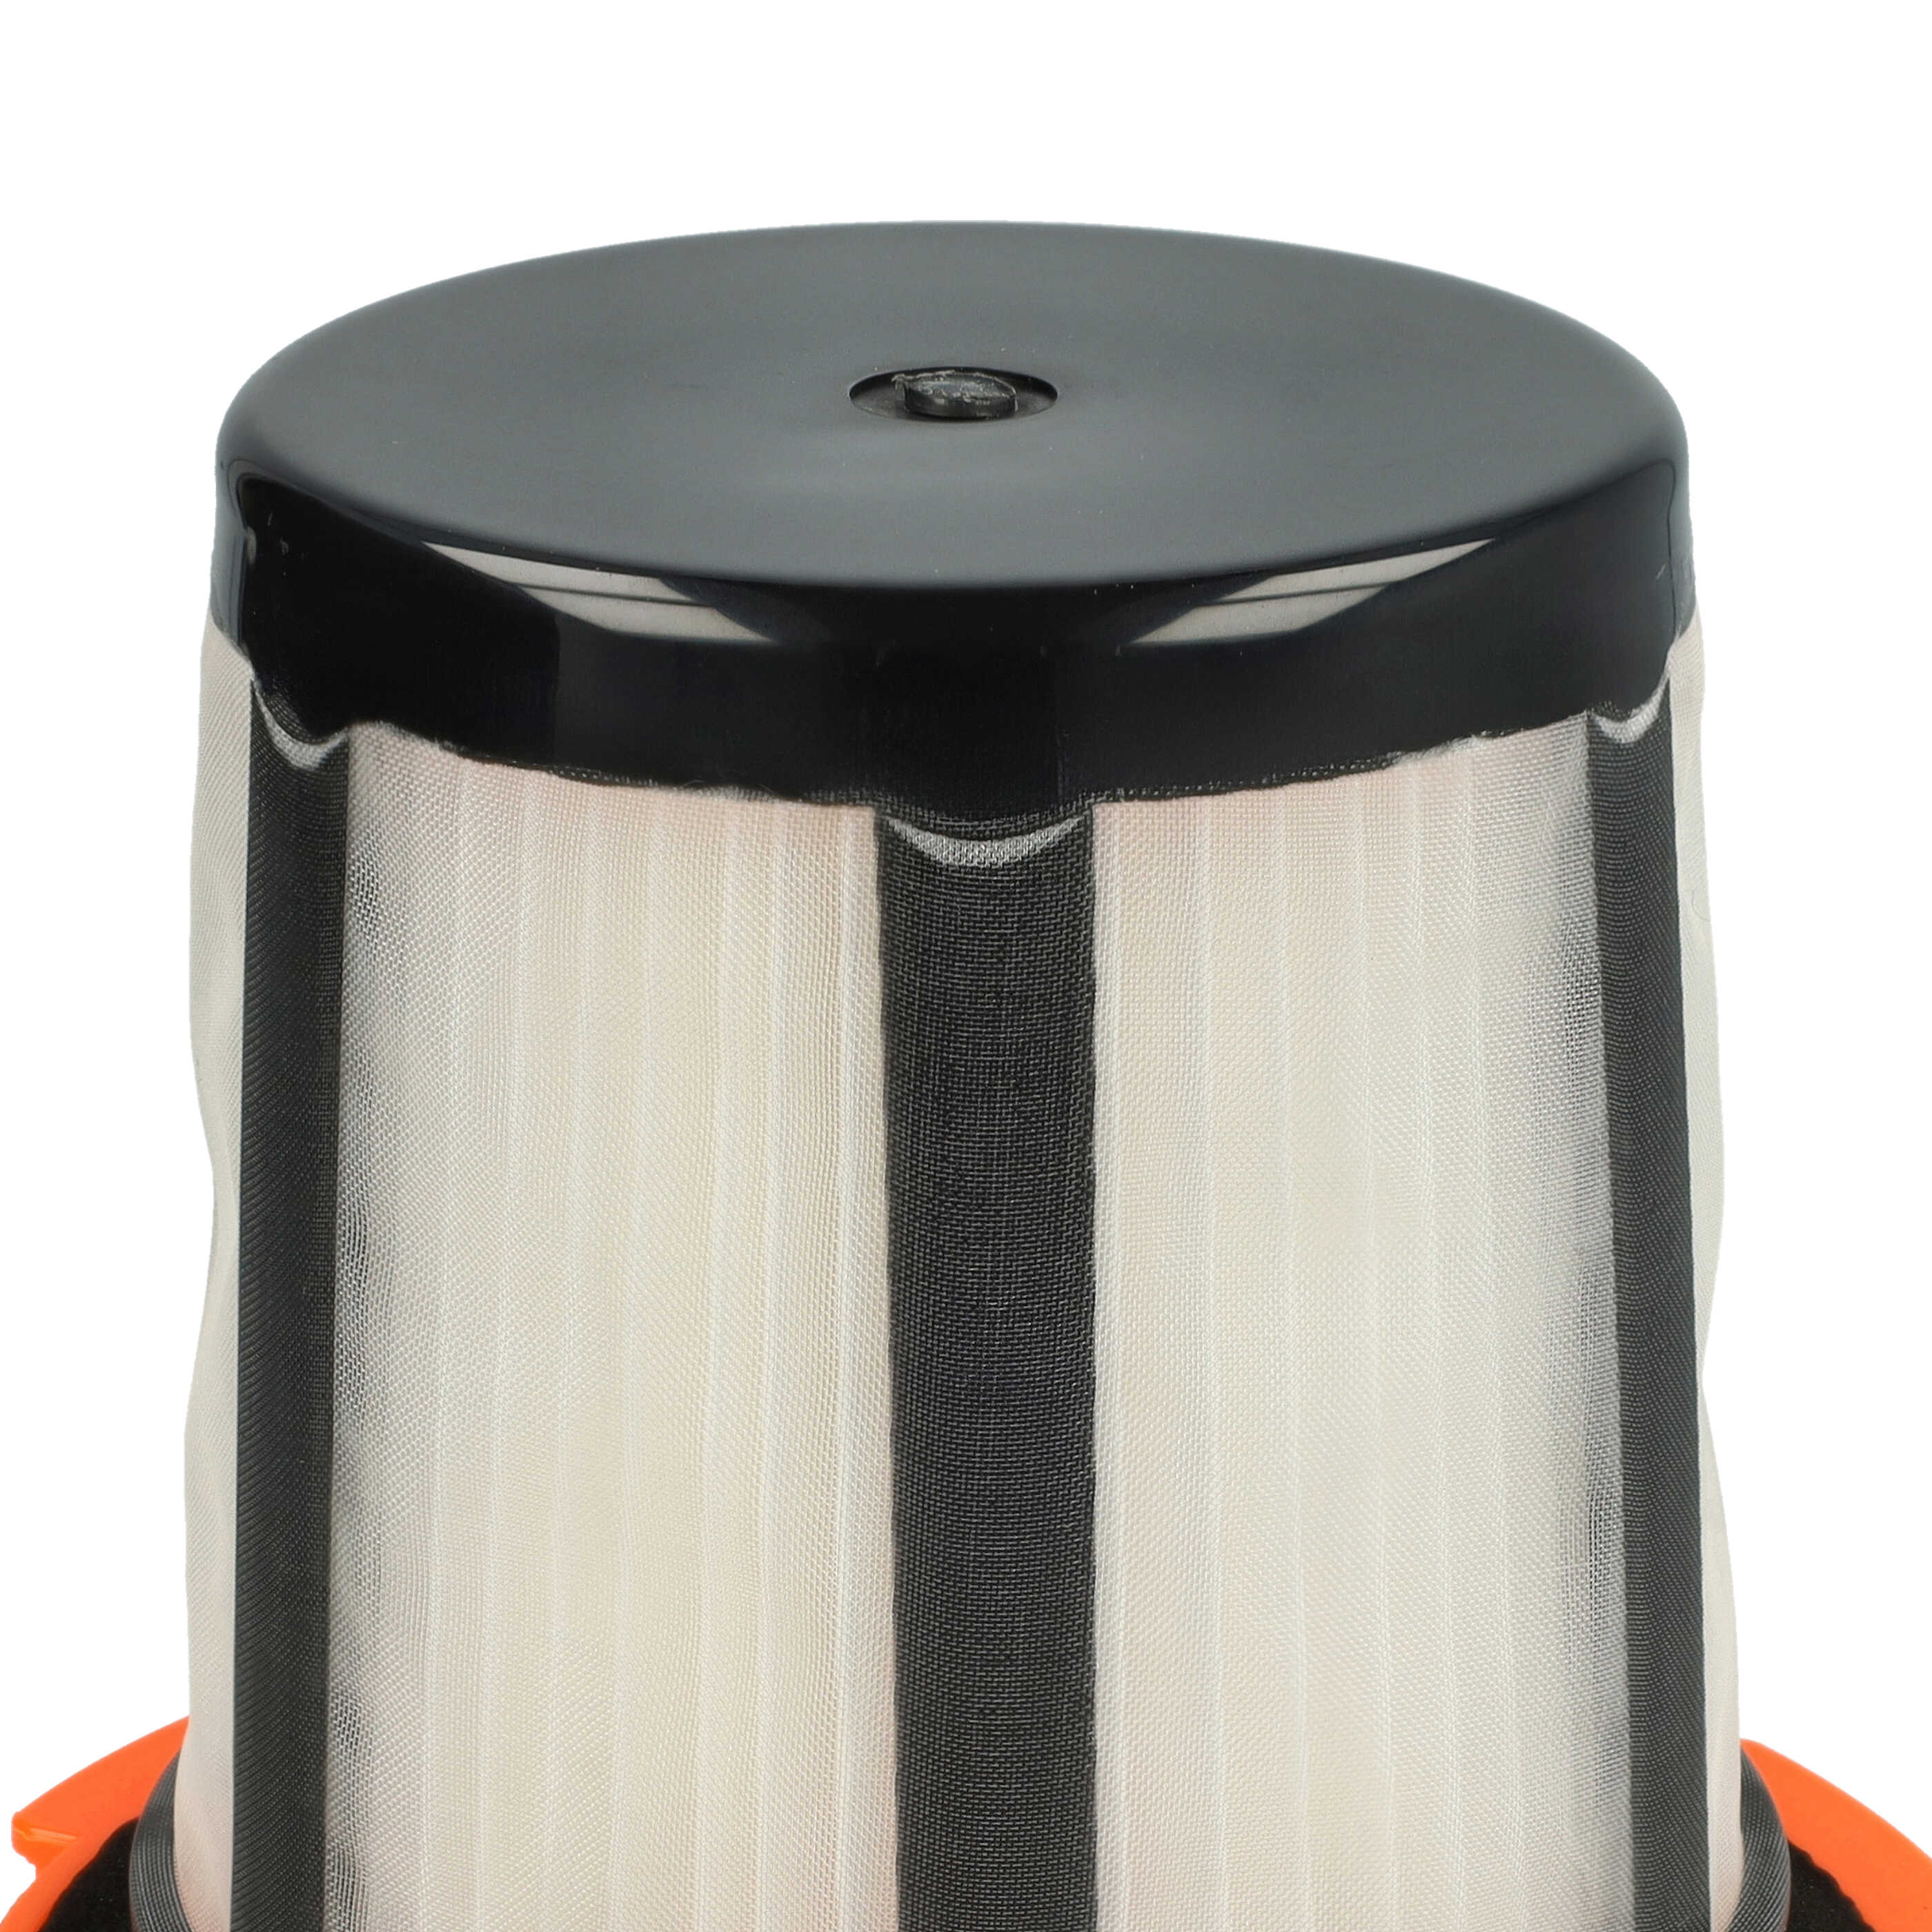 Filtro reemplaza AEG/Electrolux 4071387353, 9001969873 para aspiradora - filtro Hepa negro / naranja / blanco